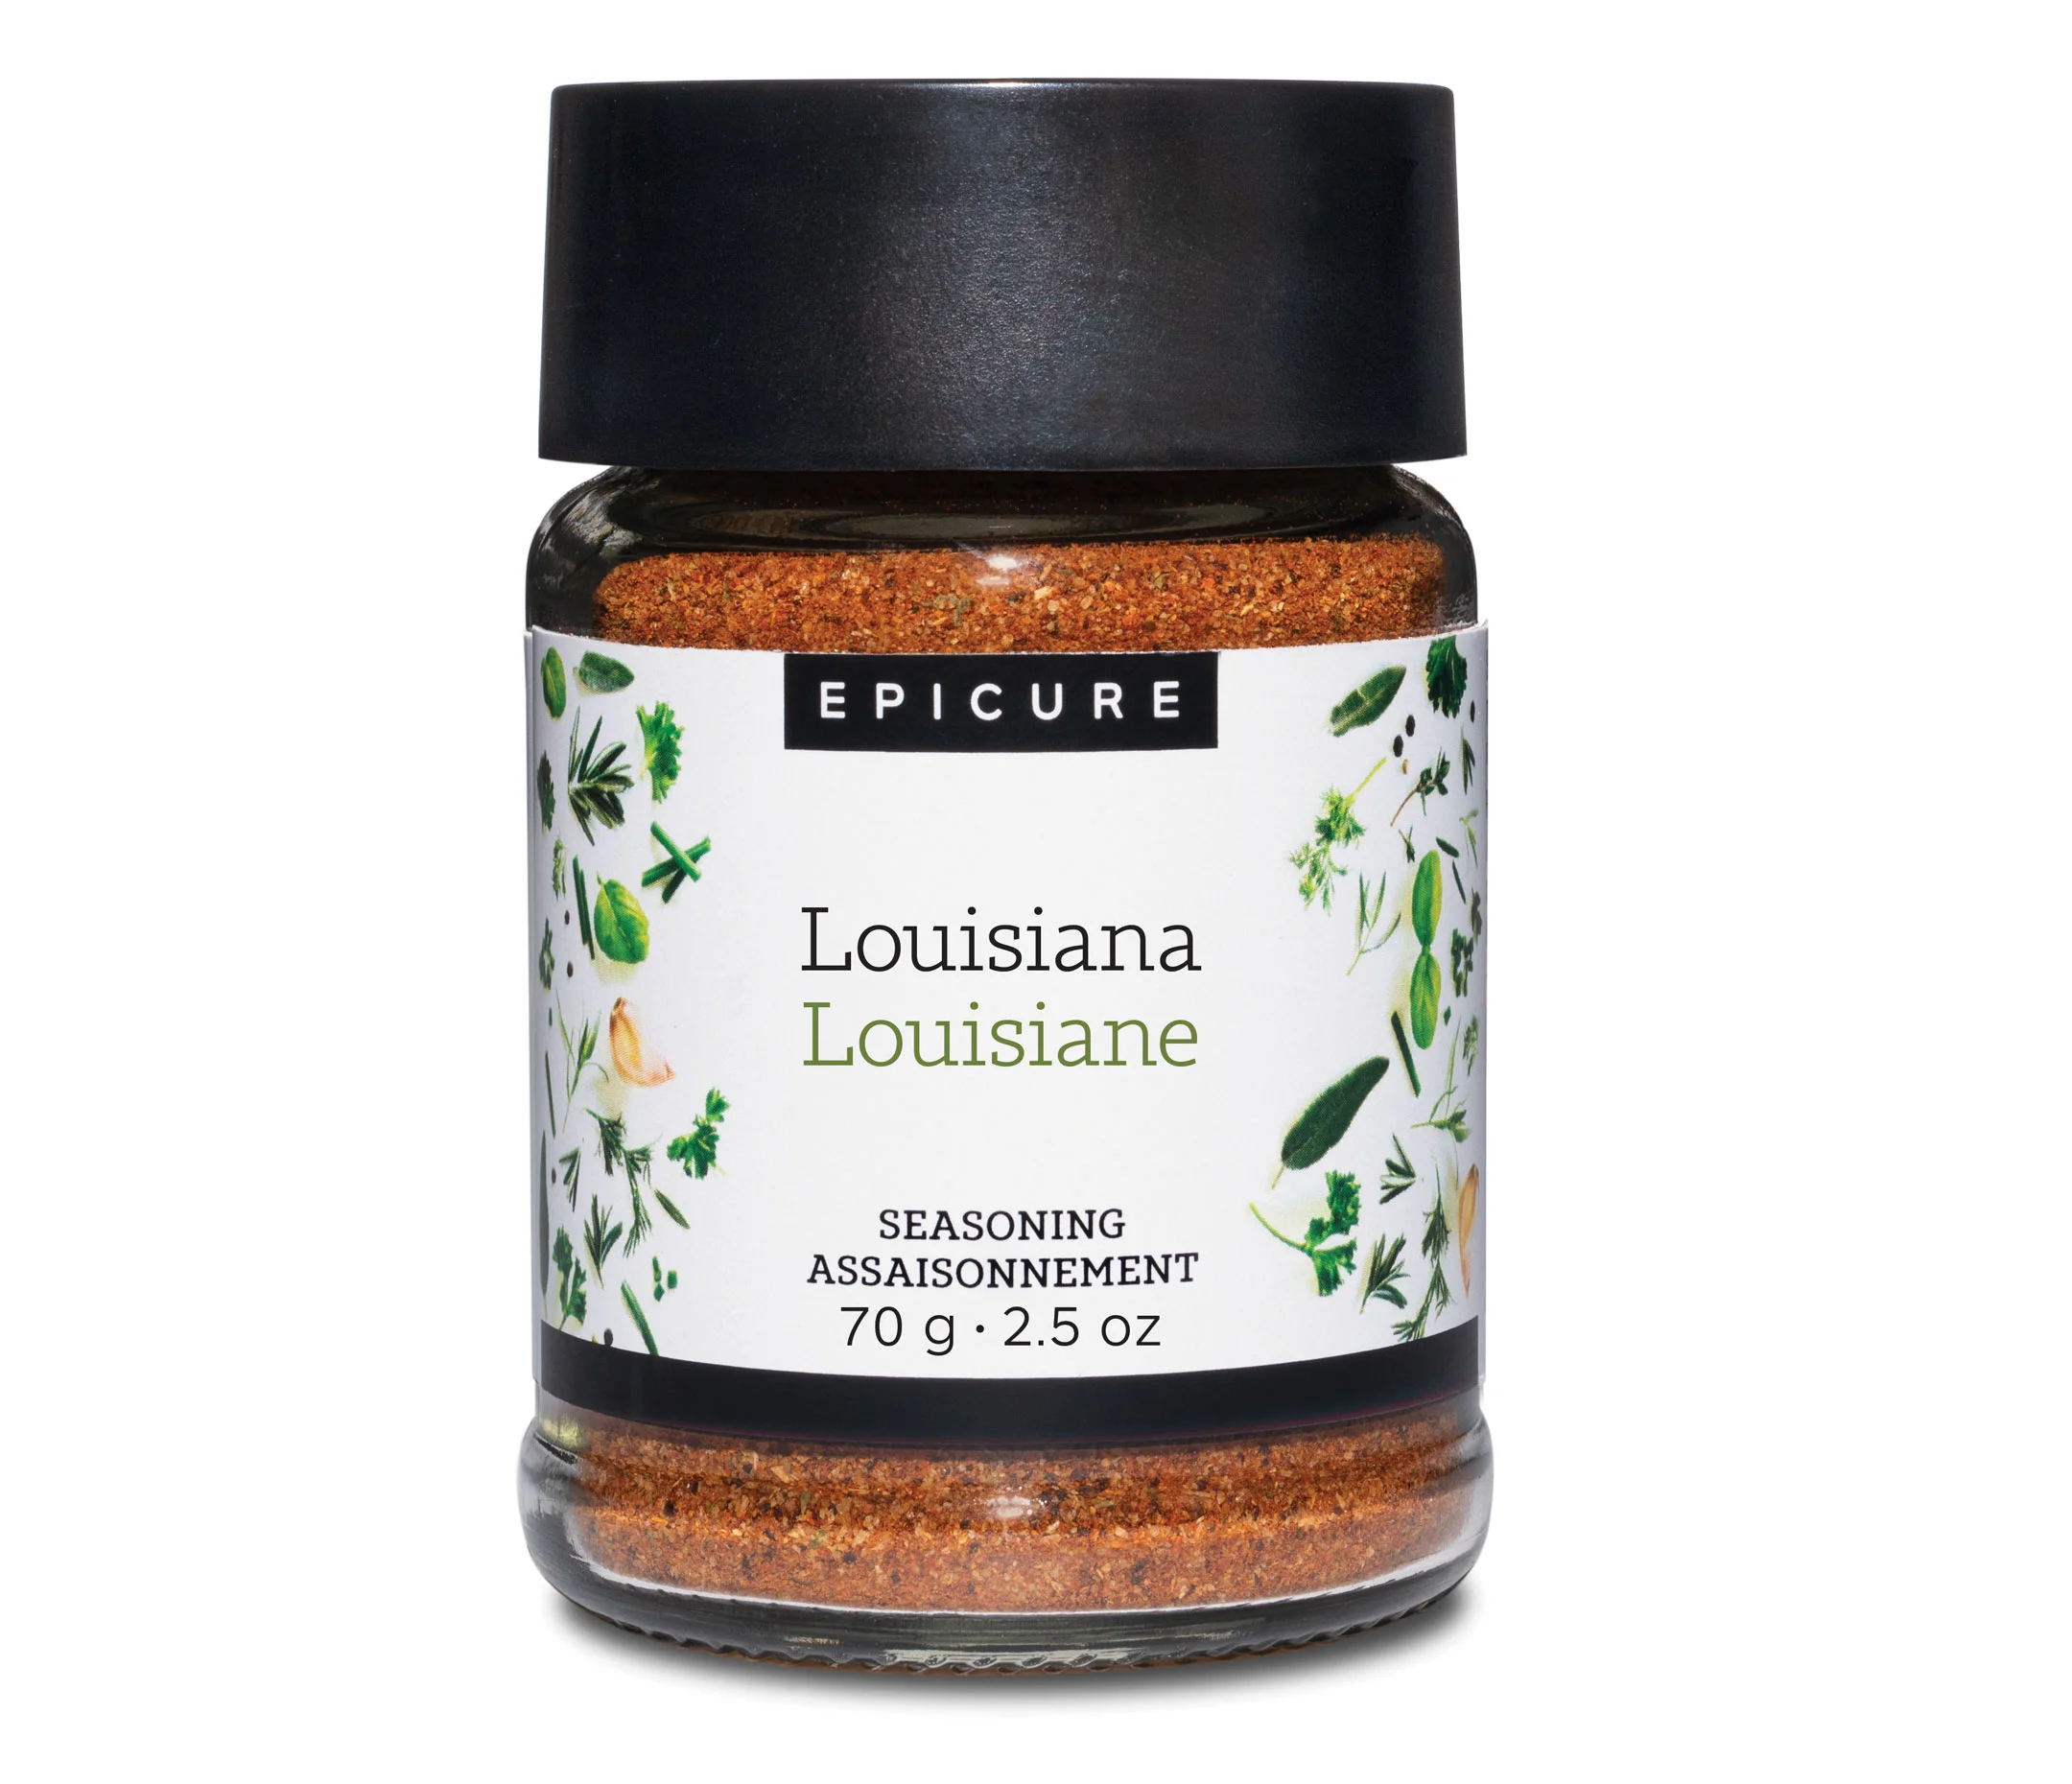 Louisiana Seasoning